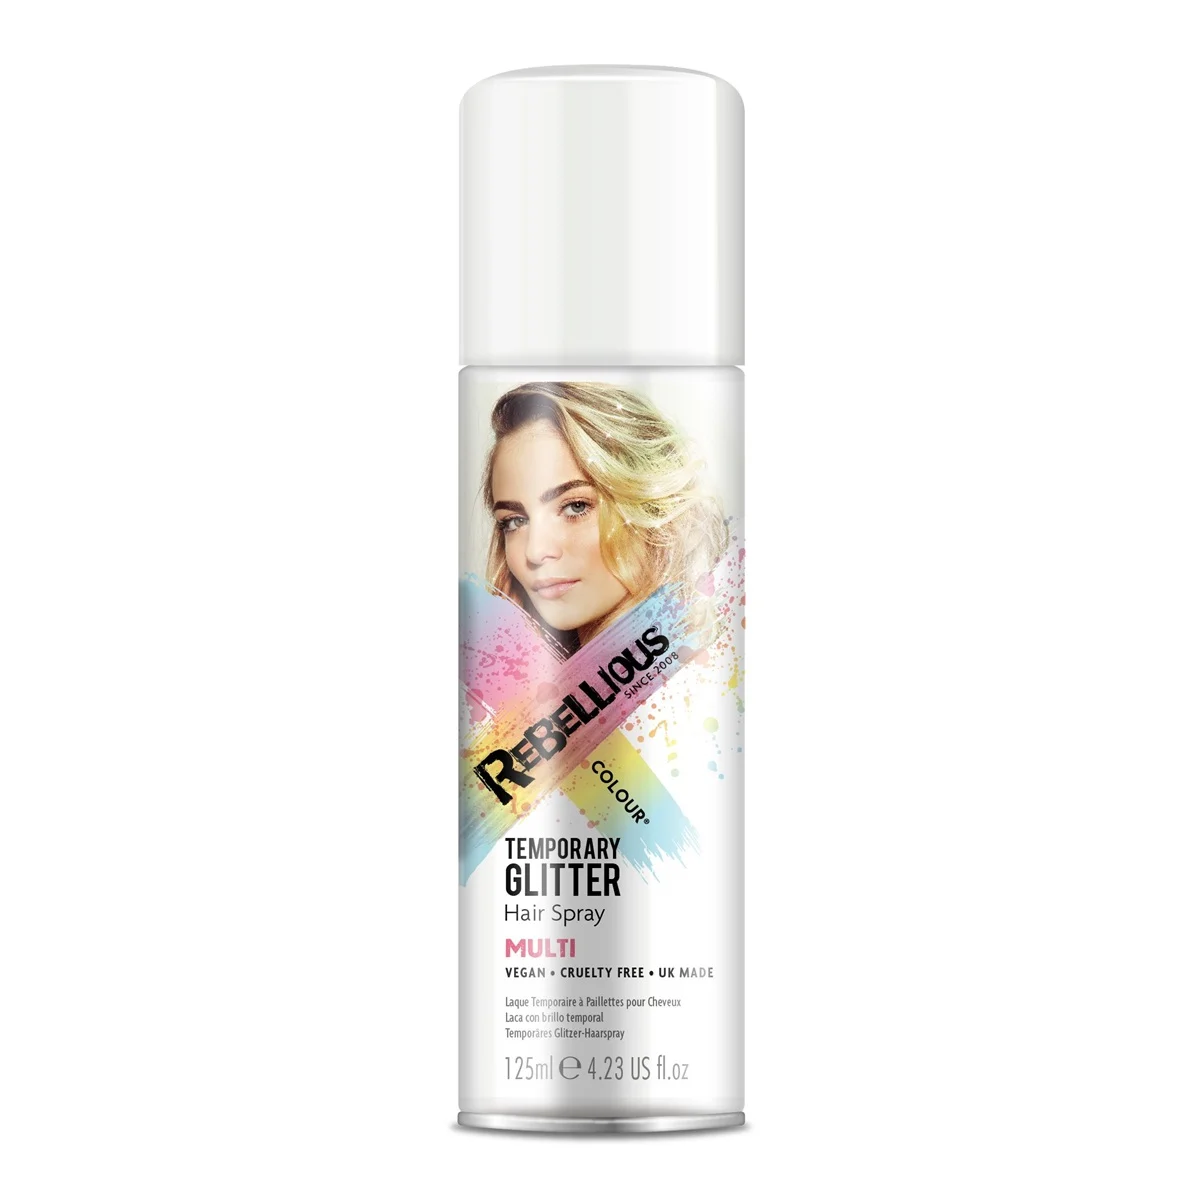 REBELLIOUS COLOR Temporary Glitter Hair Spray - Multi